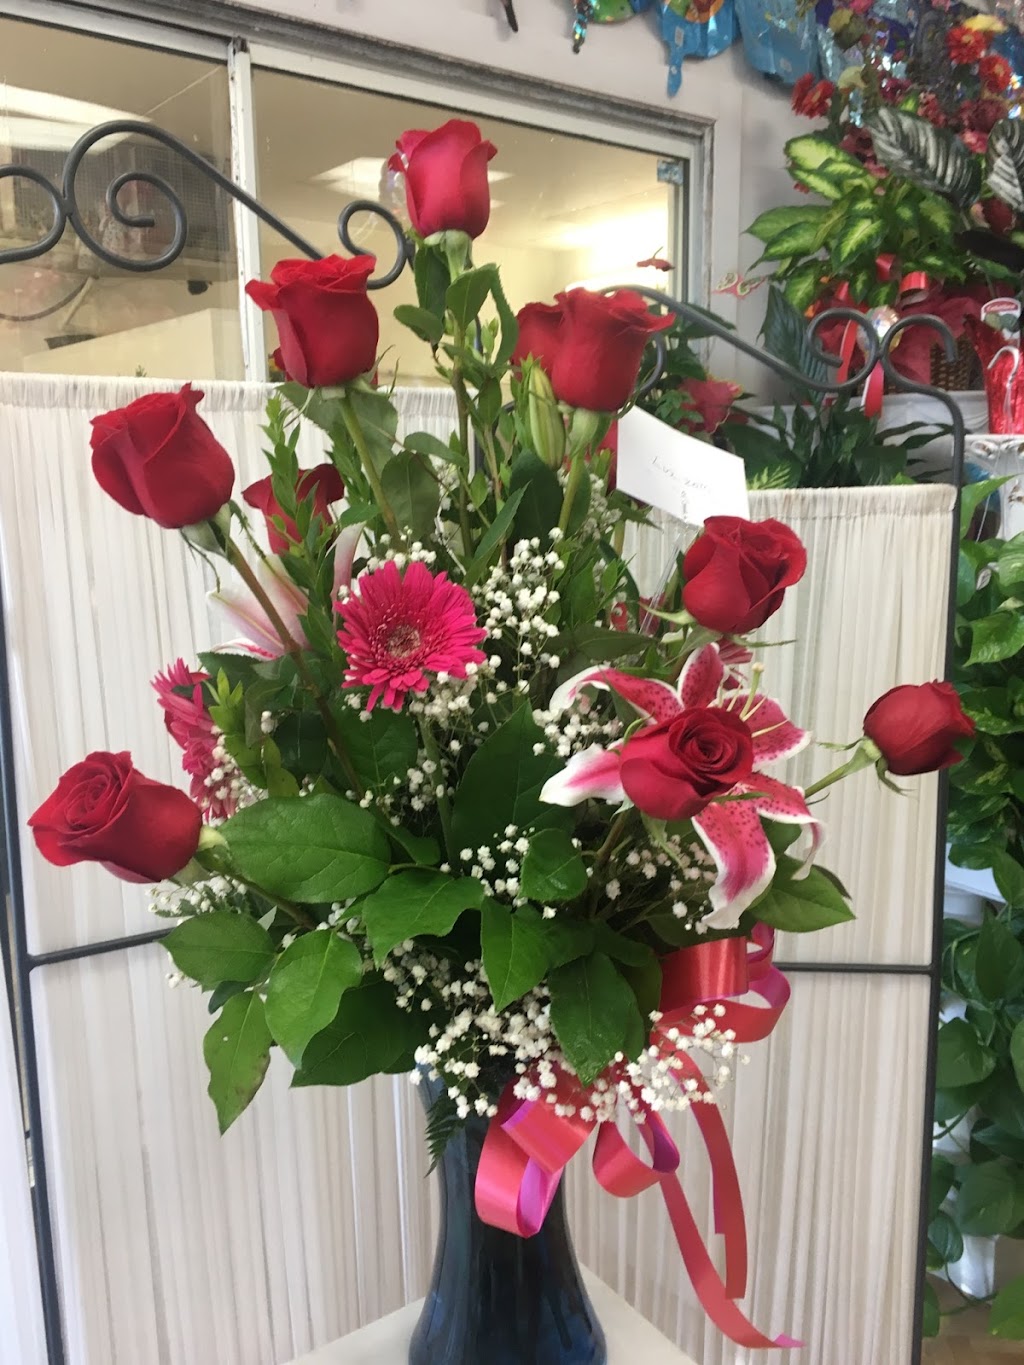 Anna Wholesale Flower & Gifts | 11512 Magnolia St # 105, Garden Grove, CA 92841 | Phone: (714) 530-3681